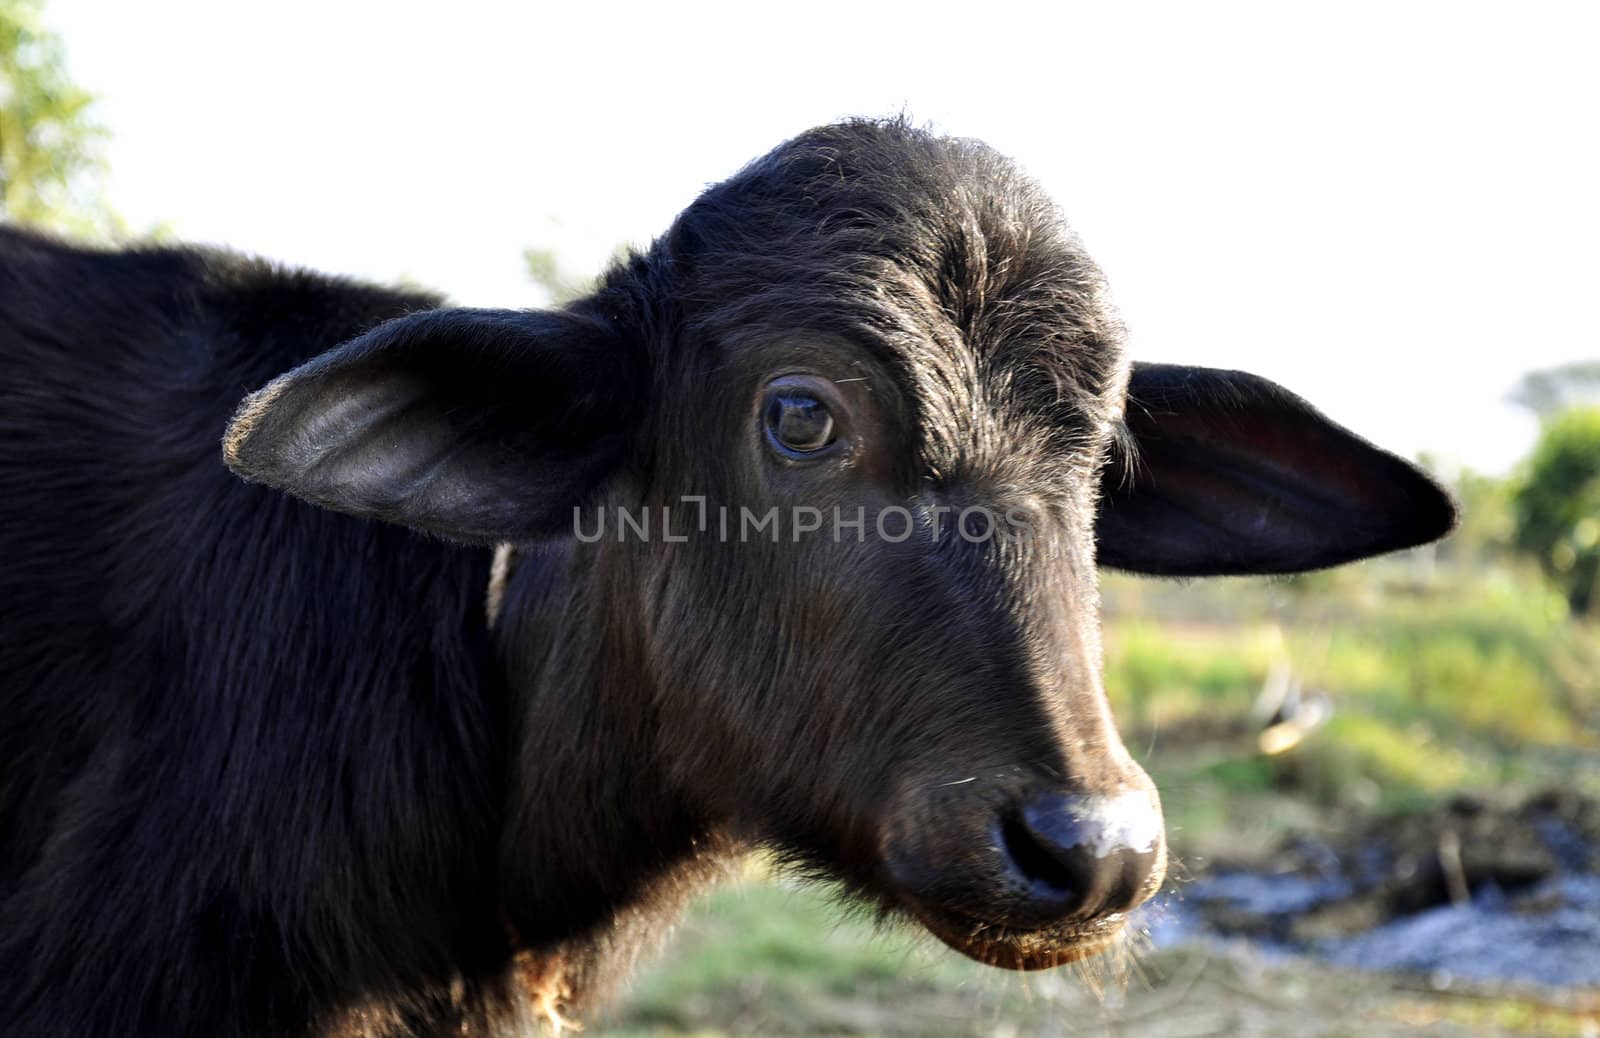 A calf at a dairy farm in India